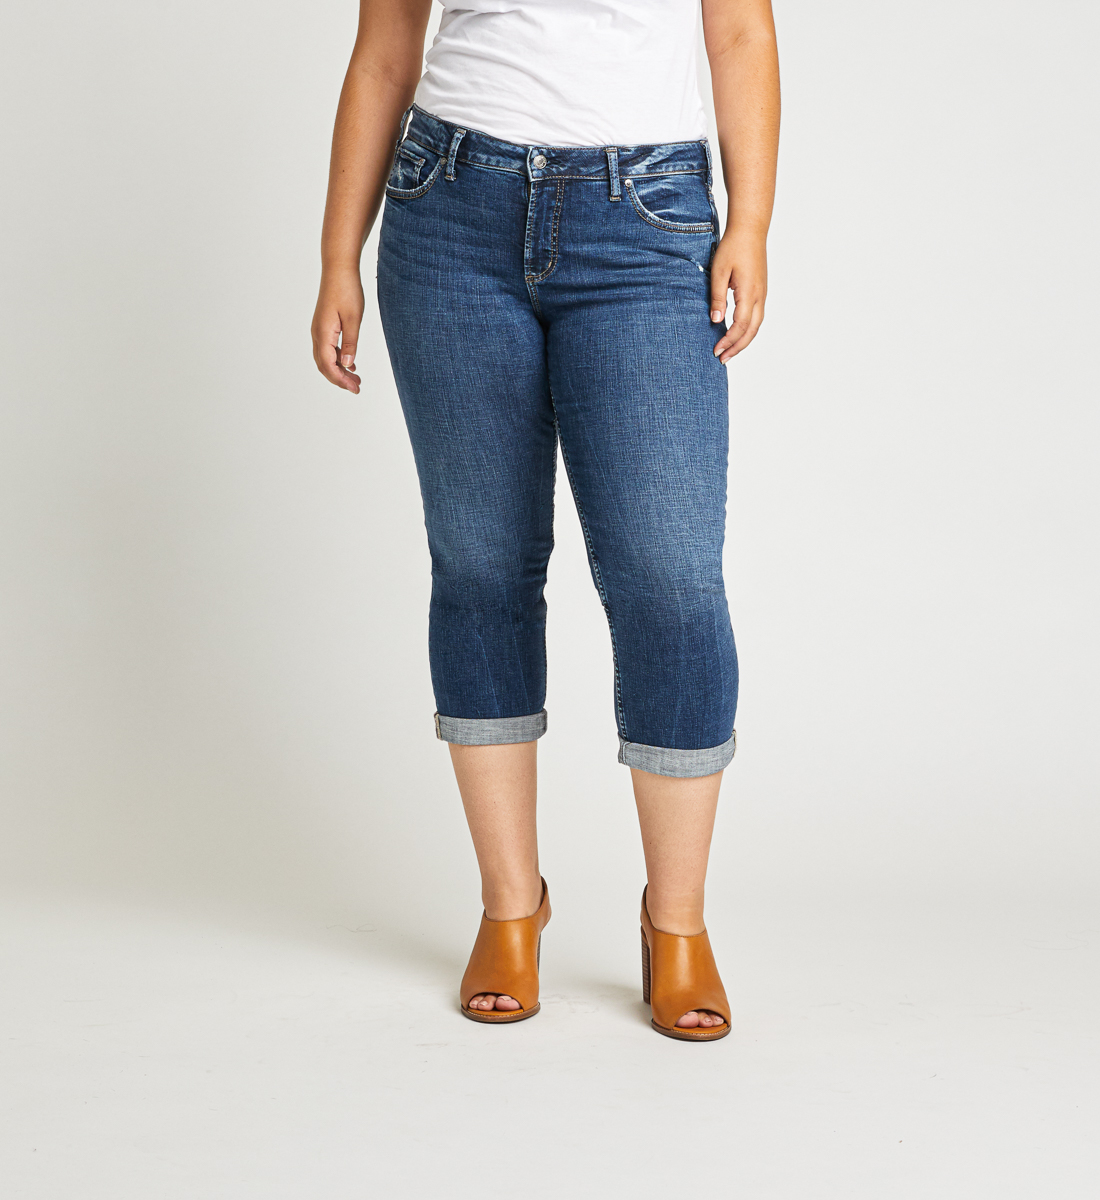 Elyse Mid Rise Capri Plus Size - Silver Jeans US